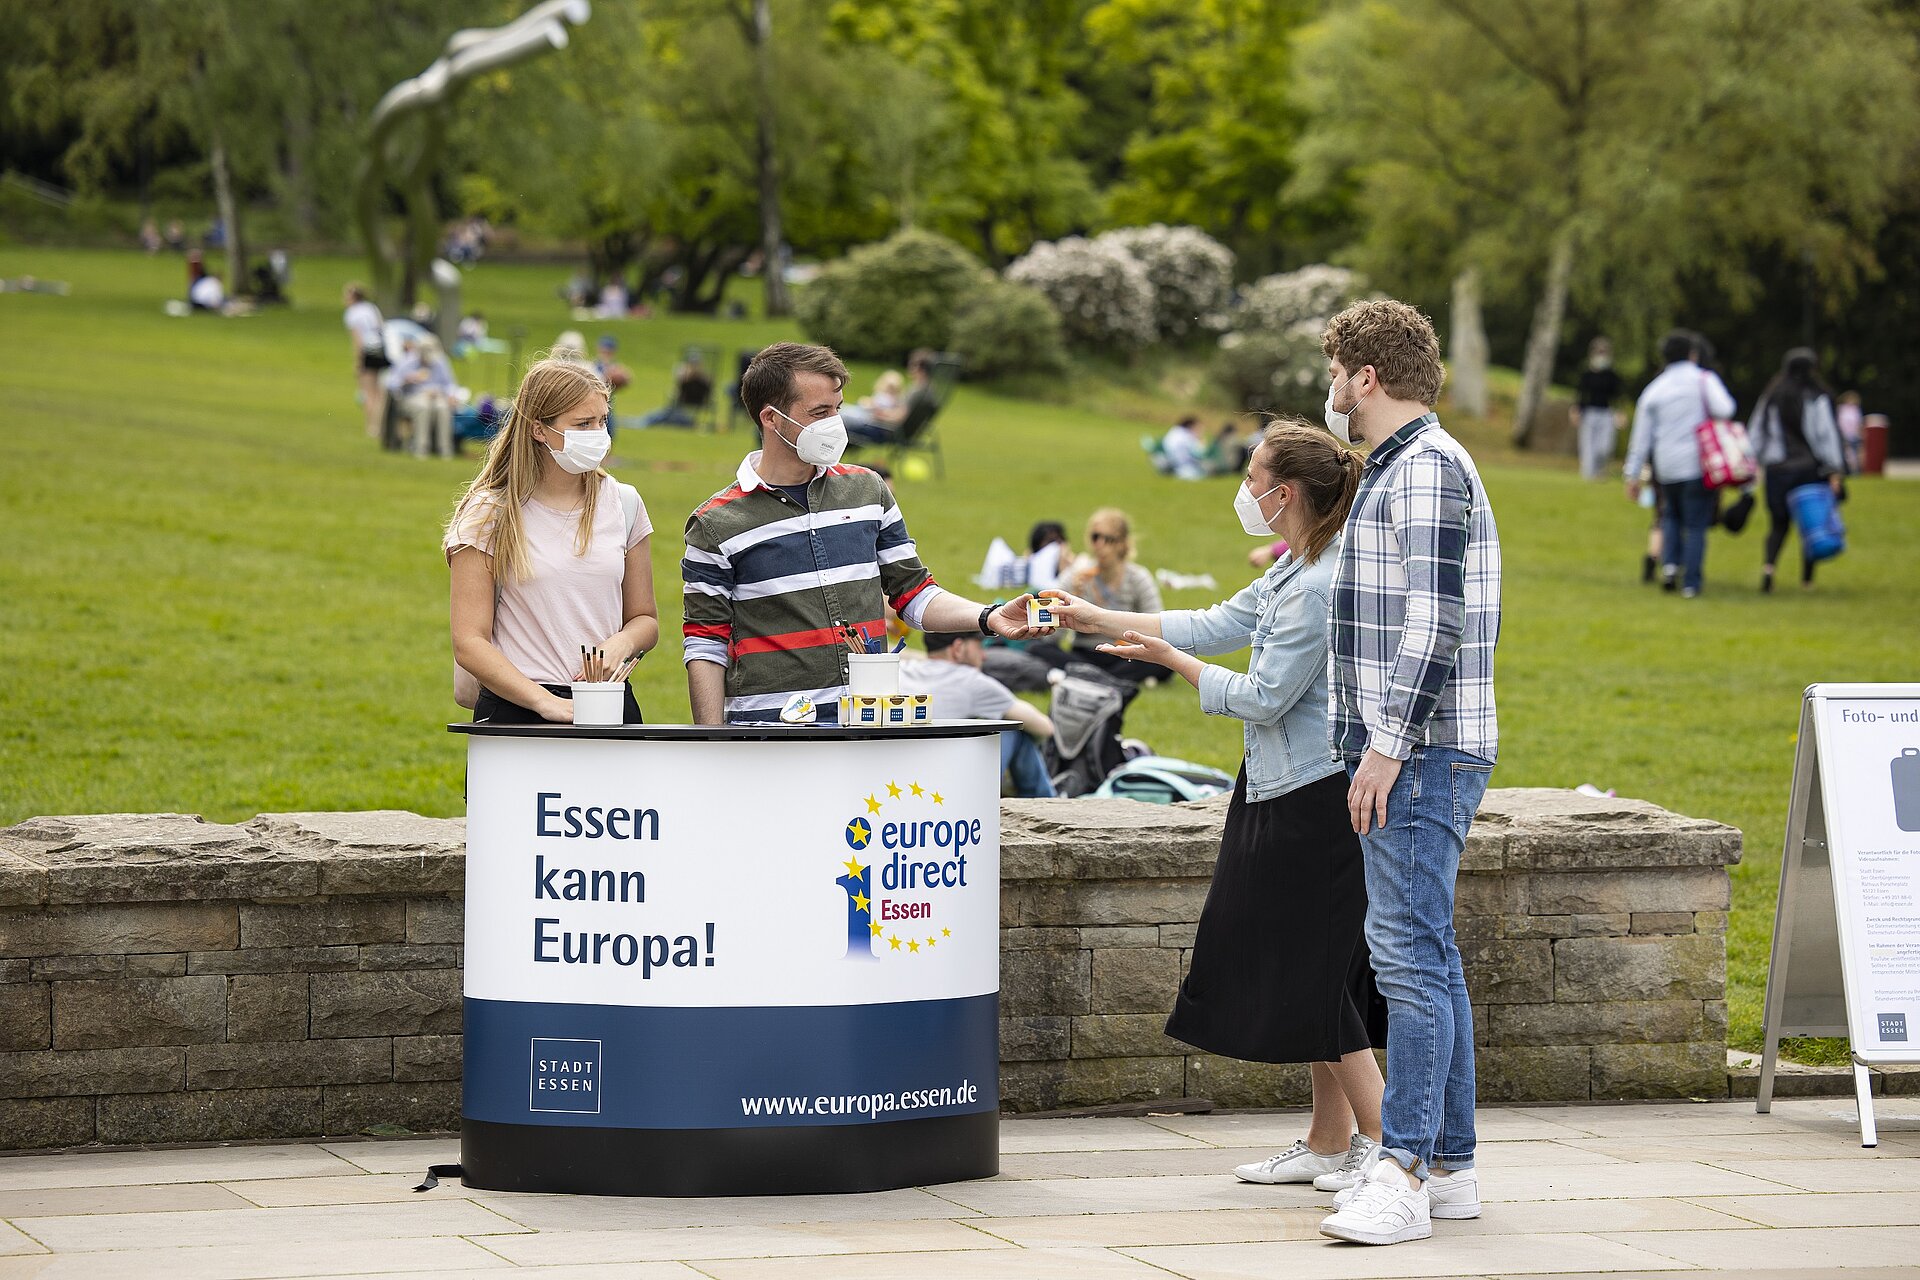 Europaaktion des EDIC Essen im Grugapark, Foto: RVR / Sascha Kreklau